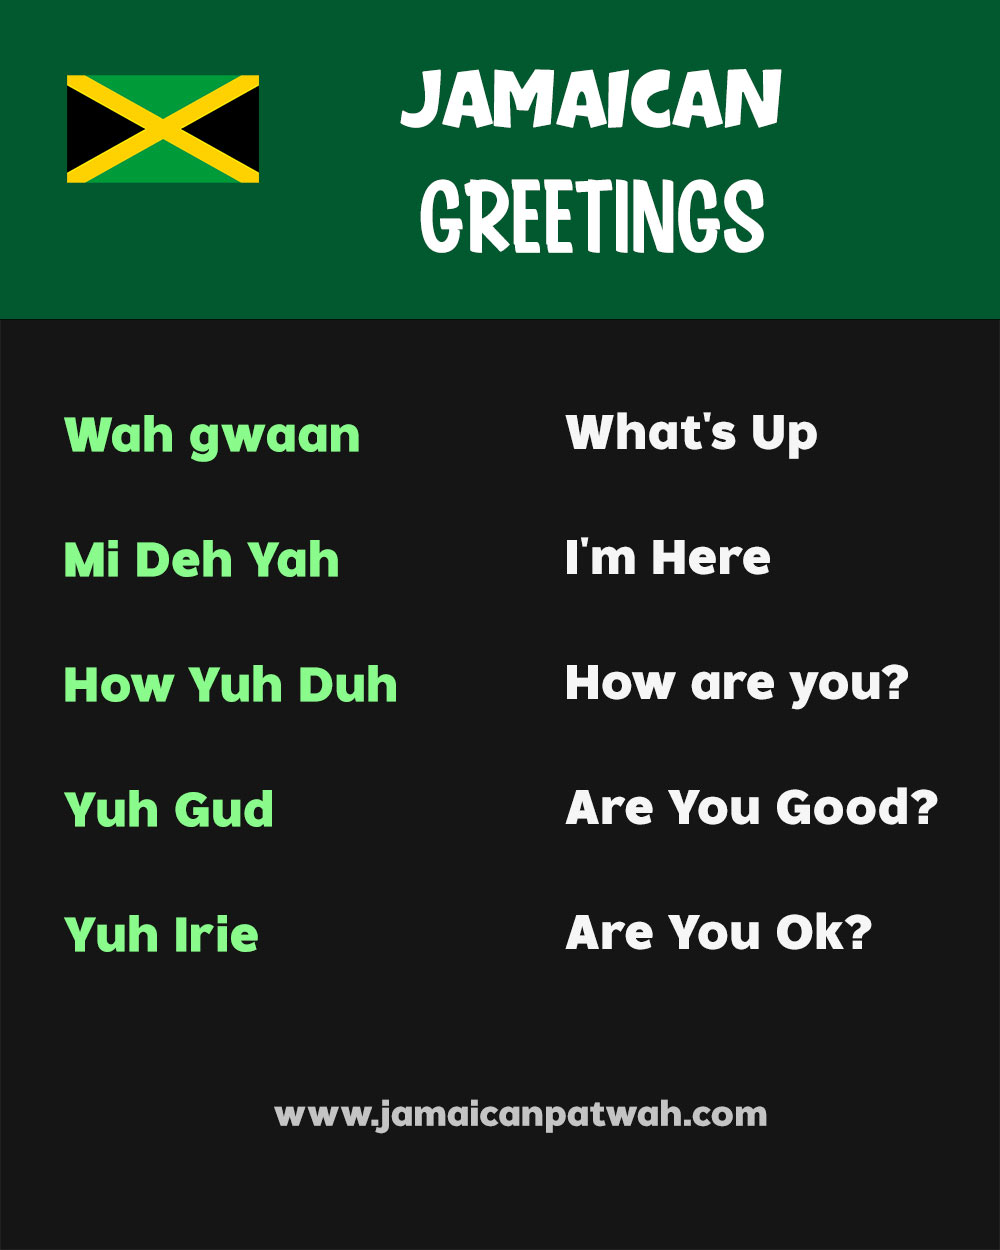 List of Jamaicans Greetings